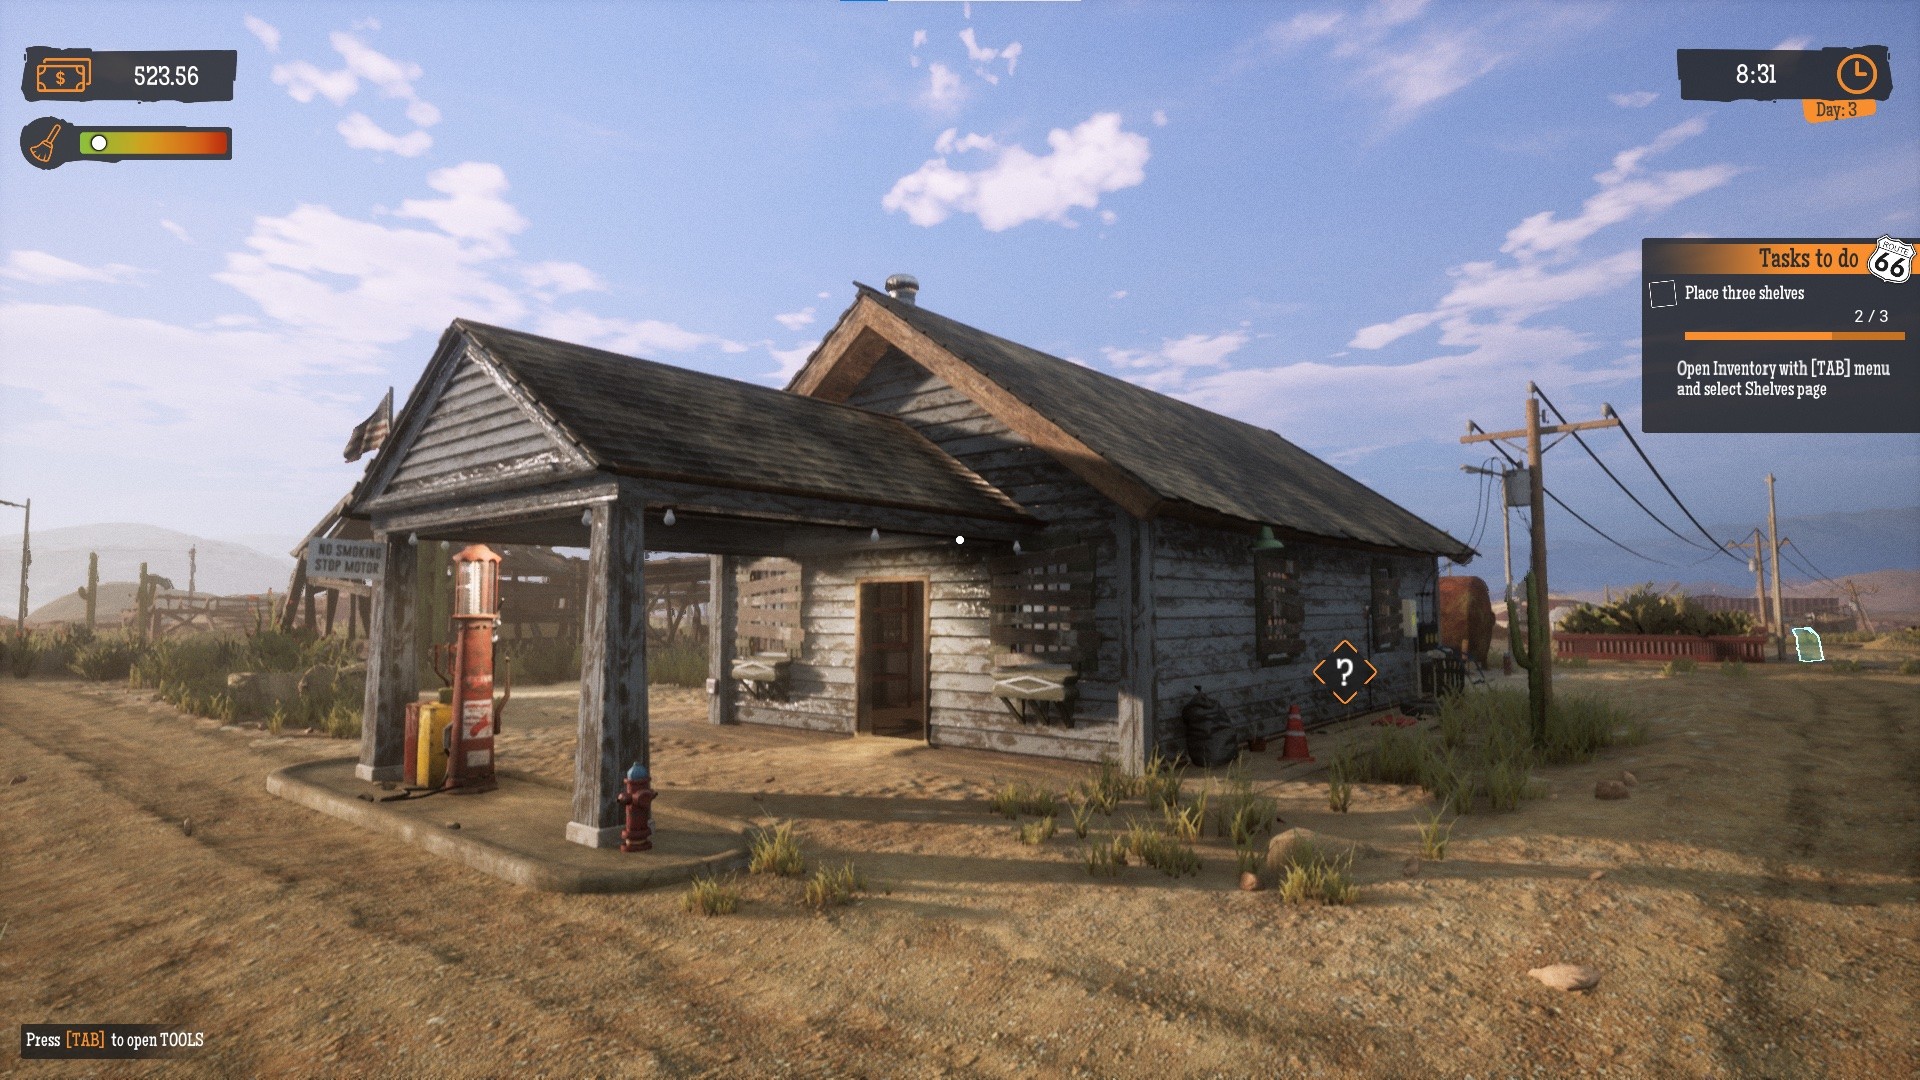 Gas Station Simulator: Prologue - Early Days screenshot